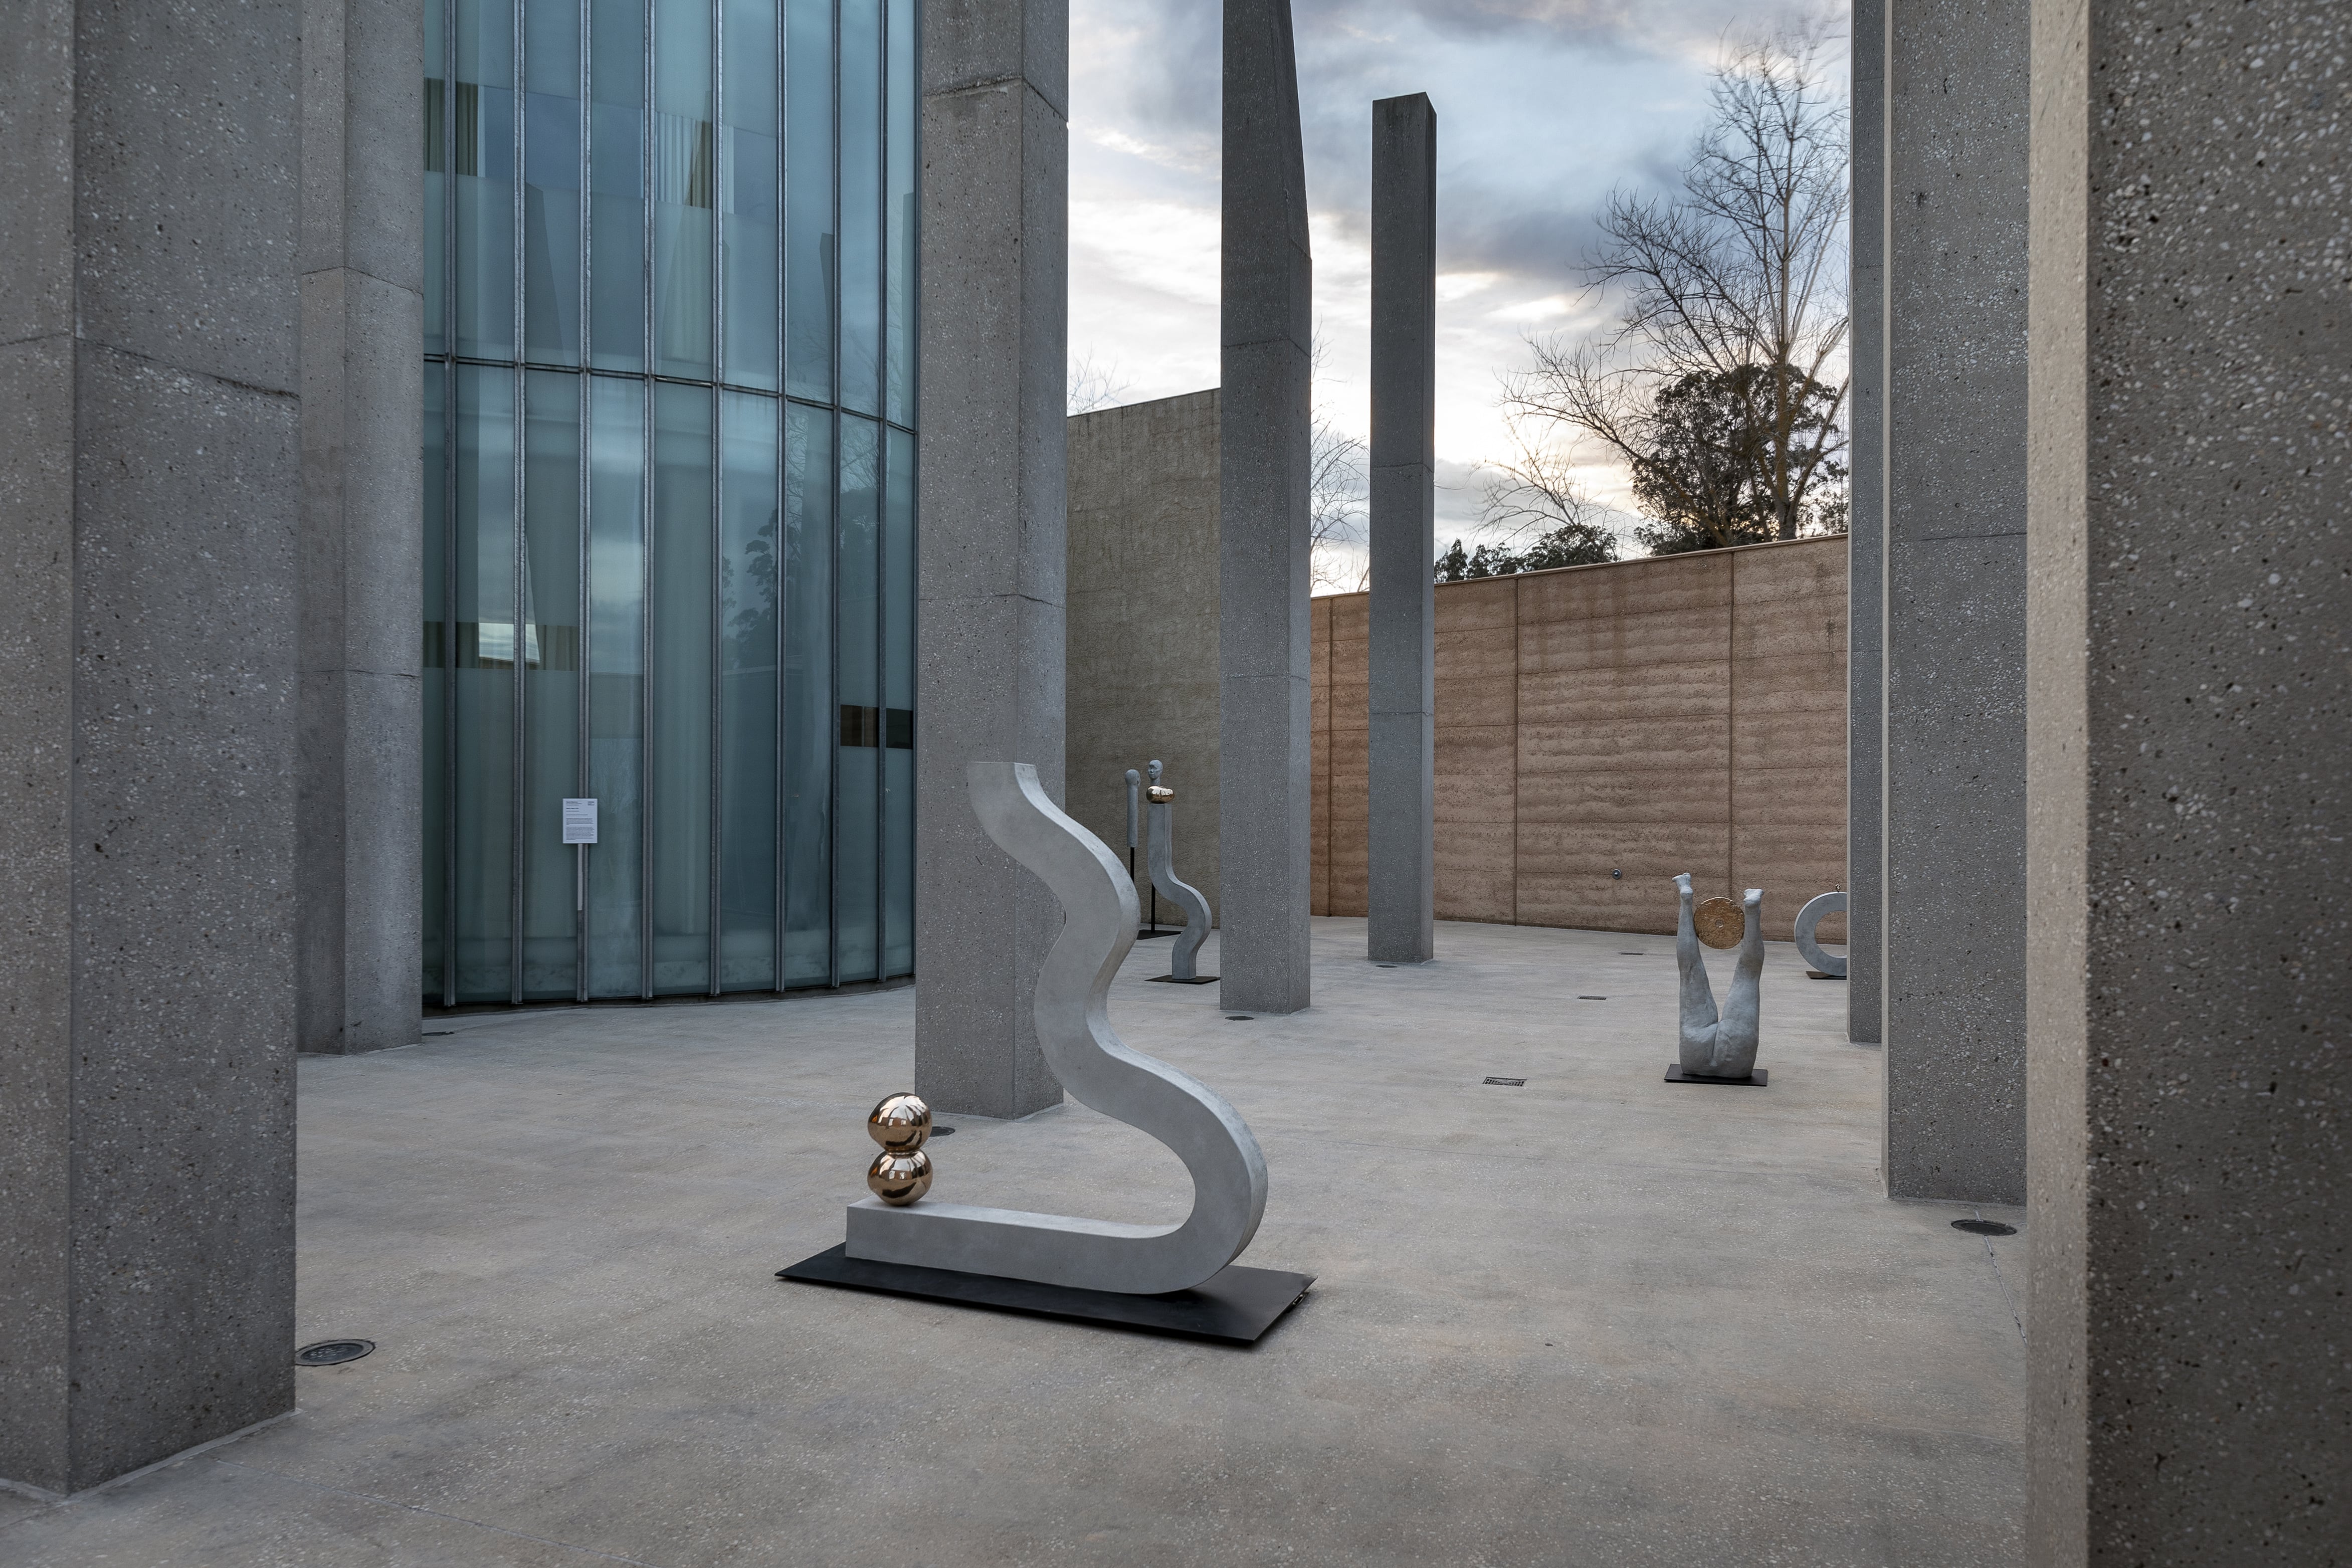 Image 01: TarraWarra  Biennial  2018:  From  Will  to  Form, installation  view  of  Sanné  Mestrom, 'Hush,  Hush'  (2018) TarraWarra  Museum  of  Art,  2018. Courtesy  of  the  artist  and  Sullivan+Strumpf,  Sydney. Photo:  Andrew  Curtis.